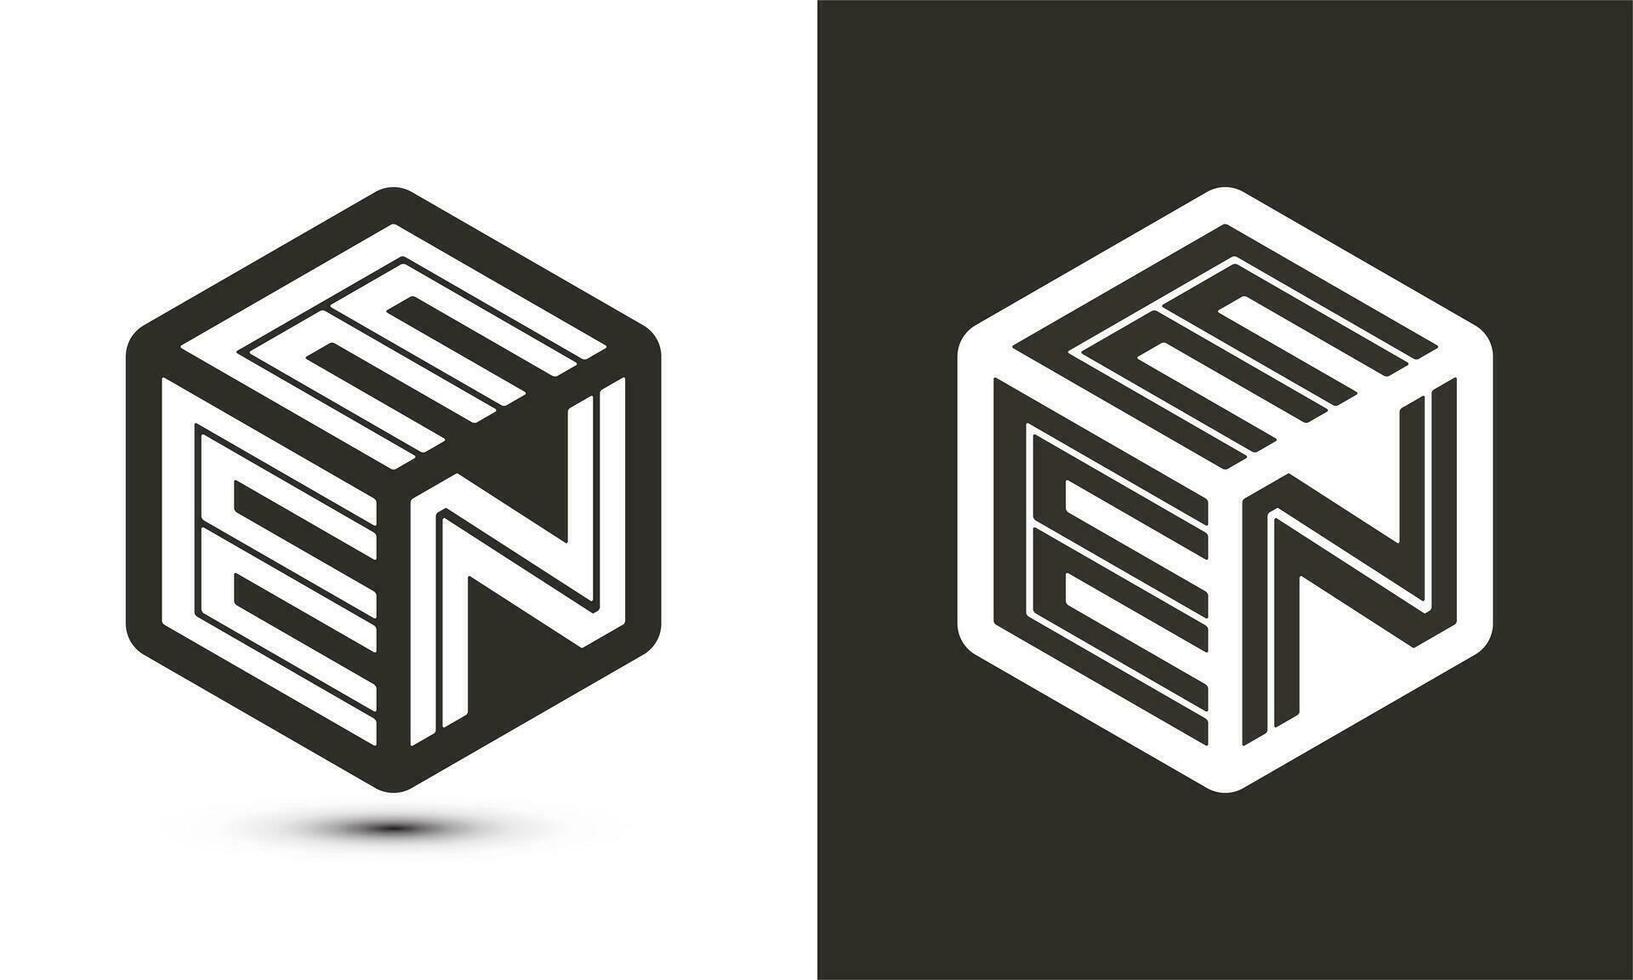 een letra logo diseño con ilustrador cubo logo, vector logo moderno alfabeto fuente superposición estilo.